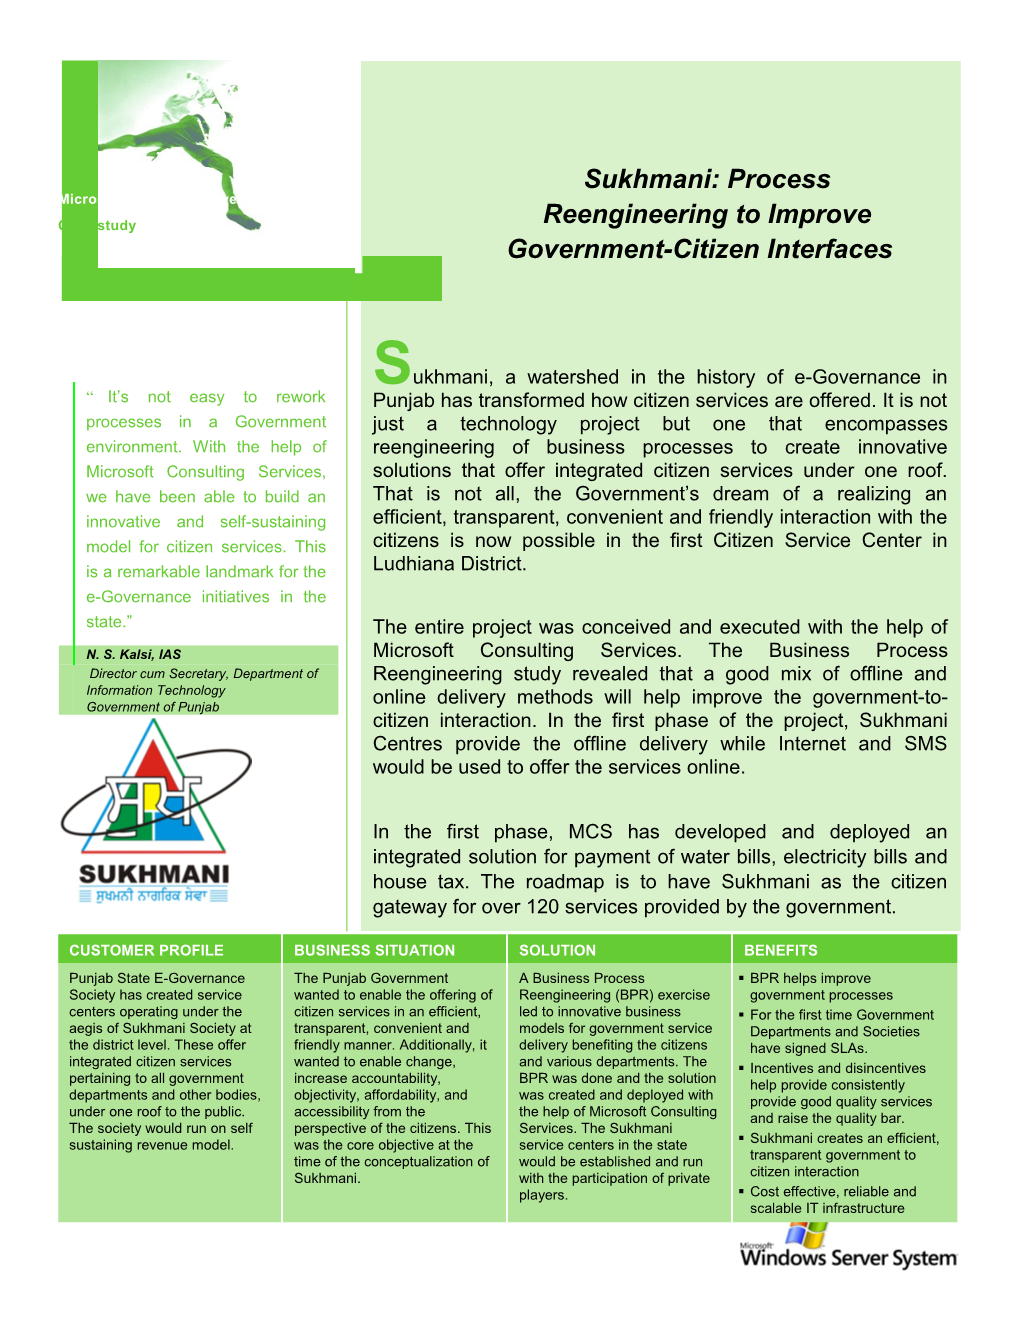 Sukhmani: Process Reengineering to Improve Government-Citizen Interfaces